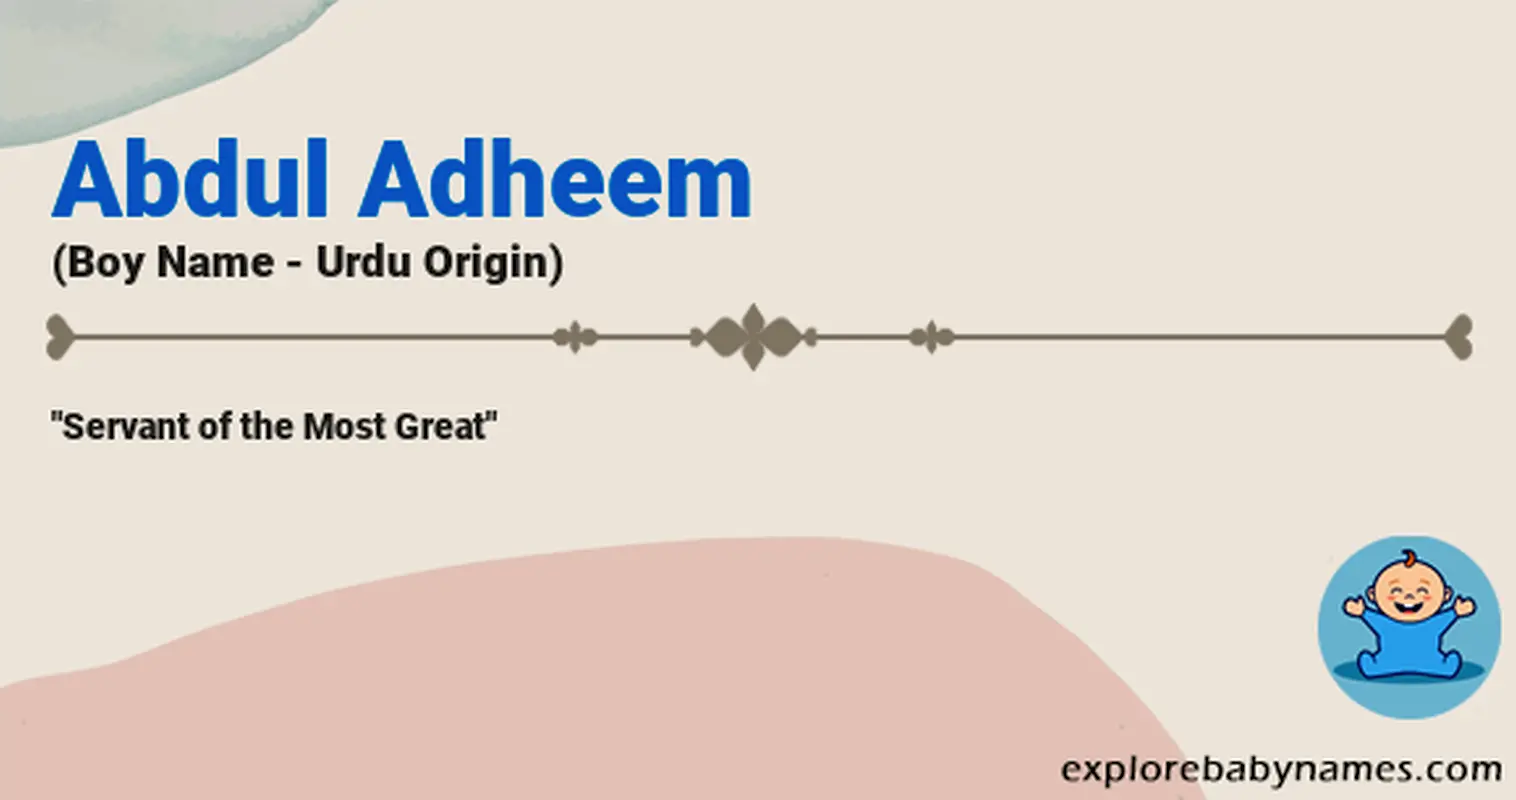 Meaning of Abdul Adheem